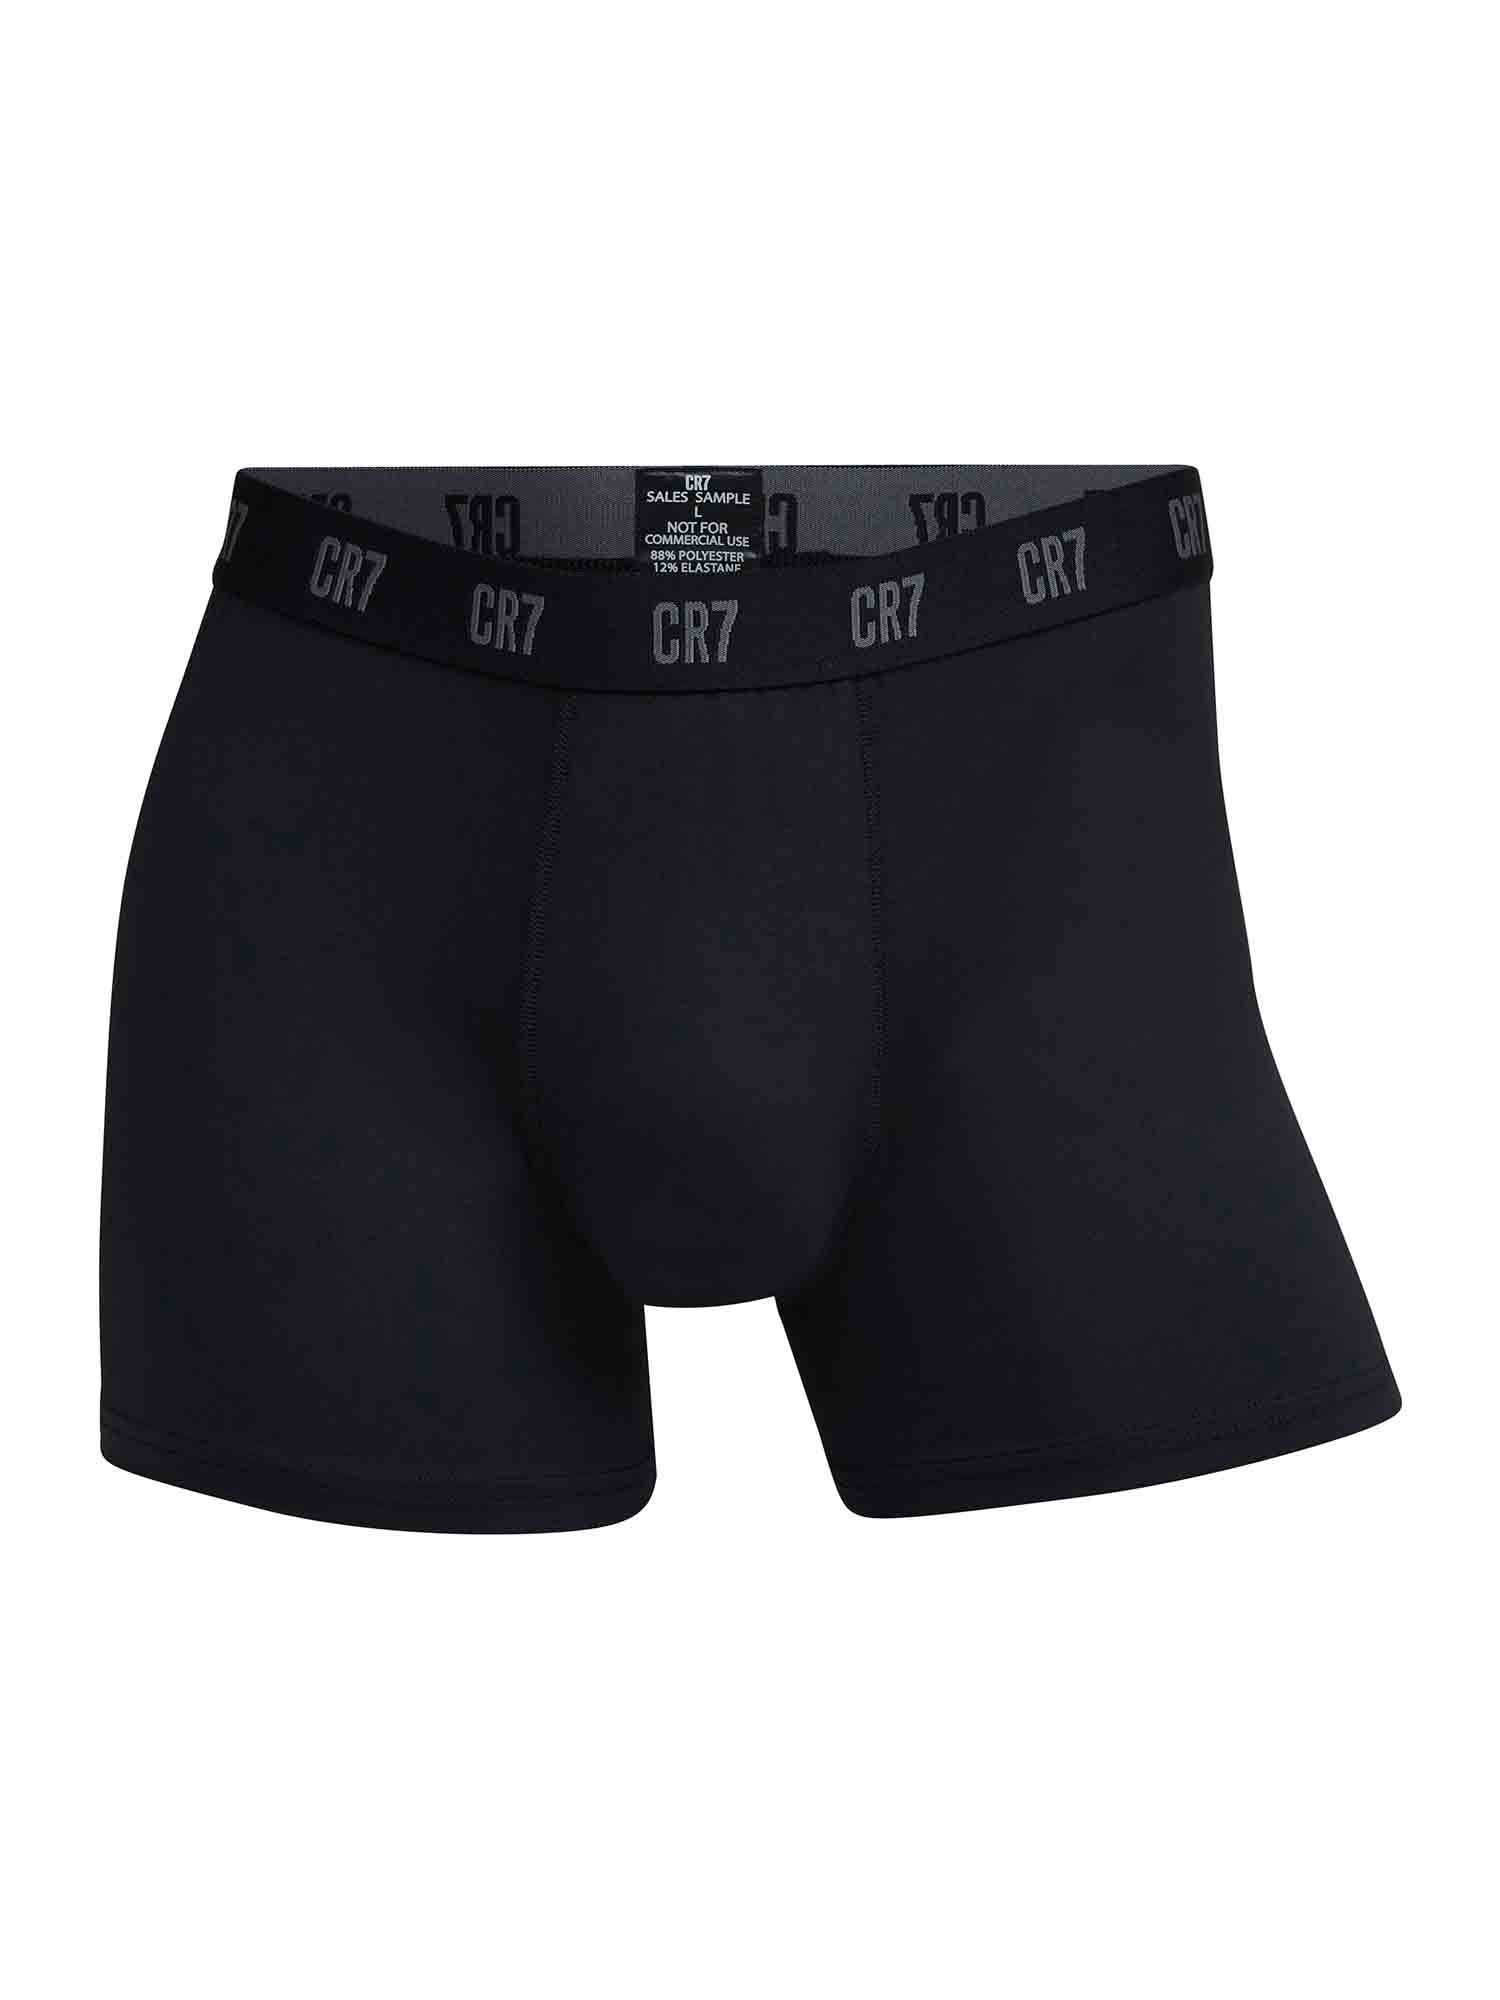 Herren Multipack Boxershorts Retro Multi Pants Pants Trunks (3-St) Männer CR7 Retro 18